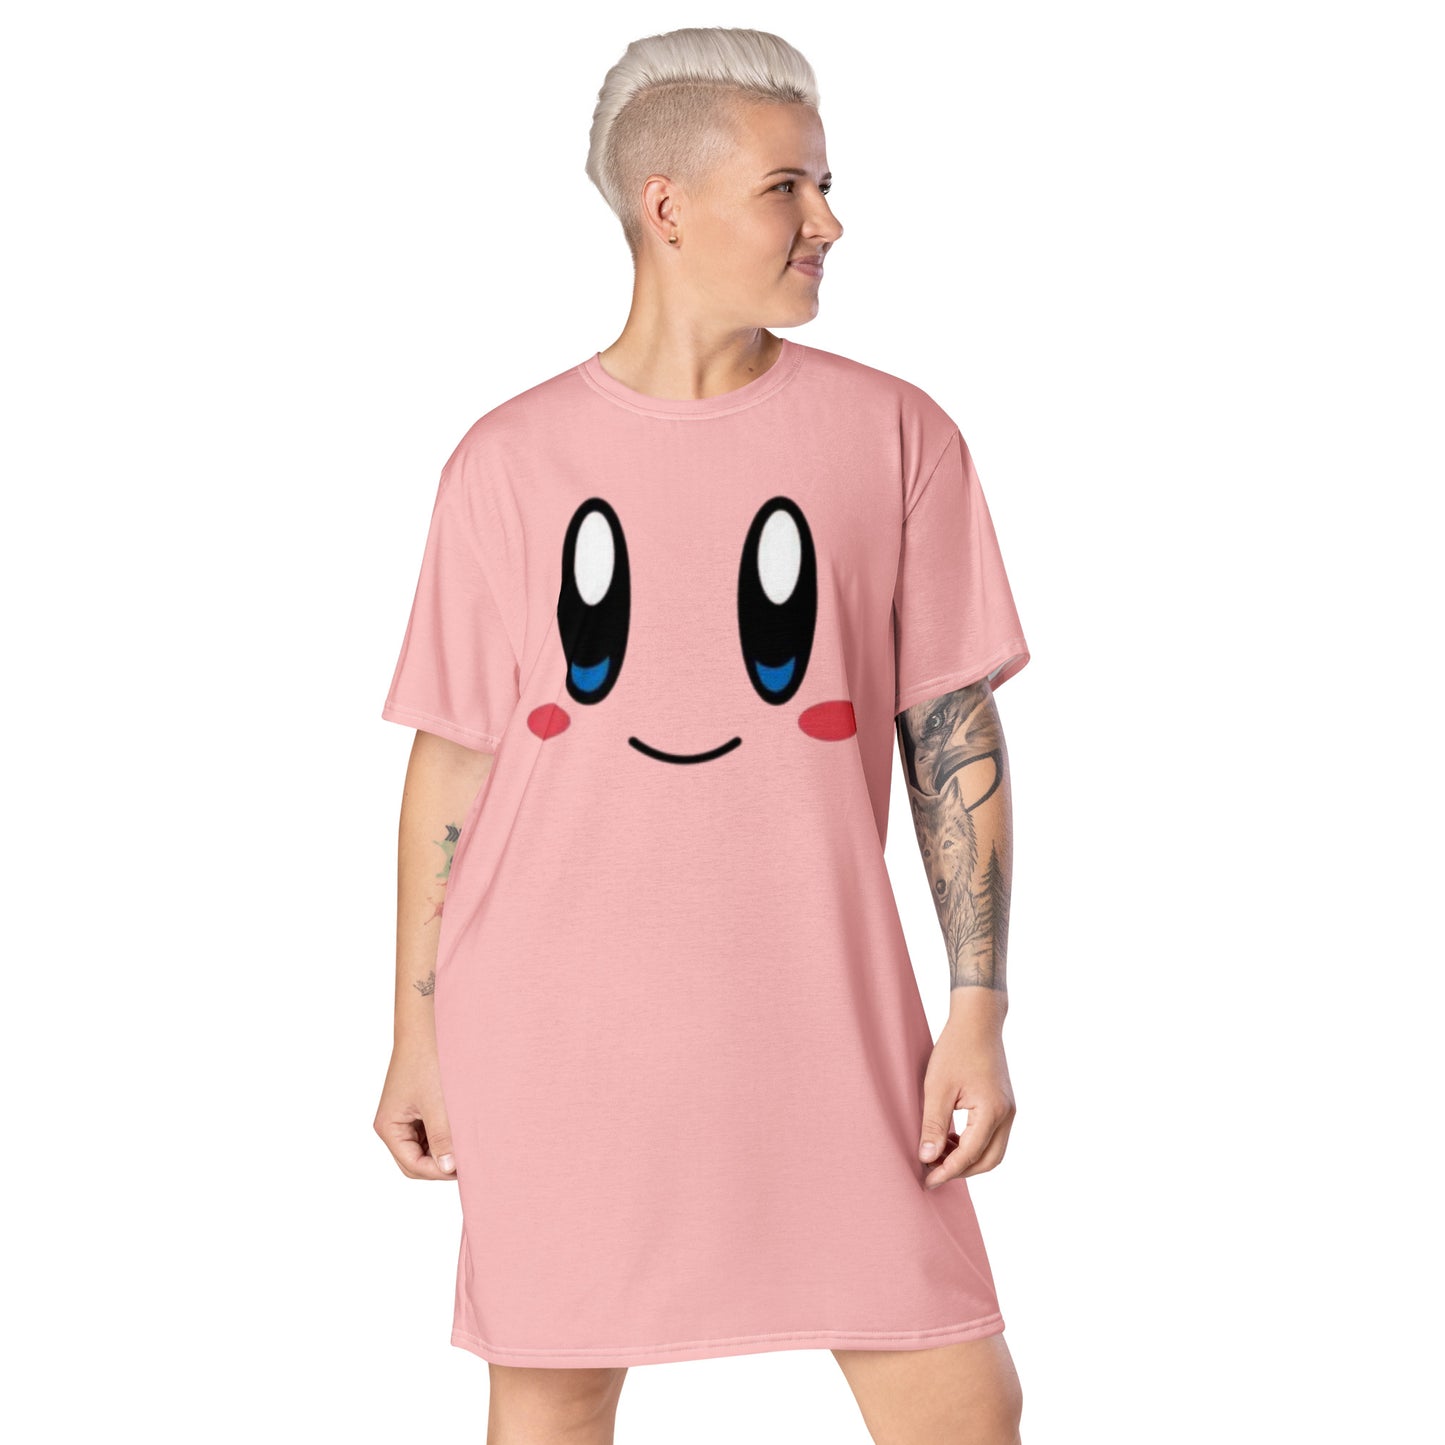 Kirby Dress / Kirby T-shirt dress